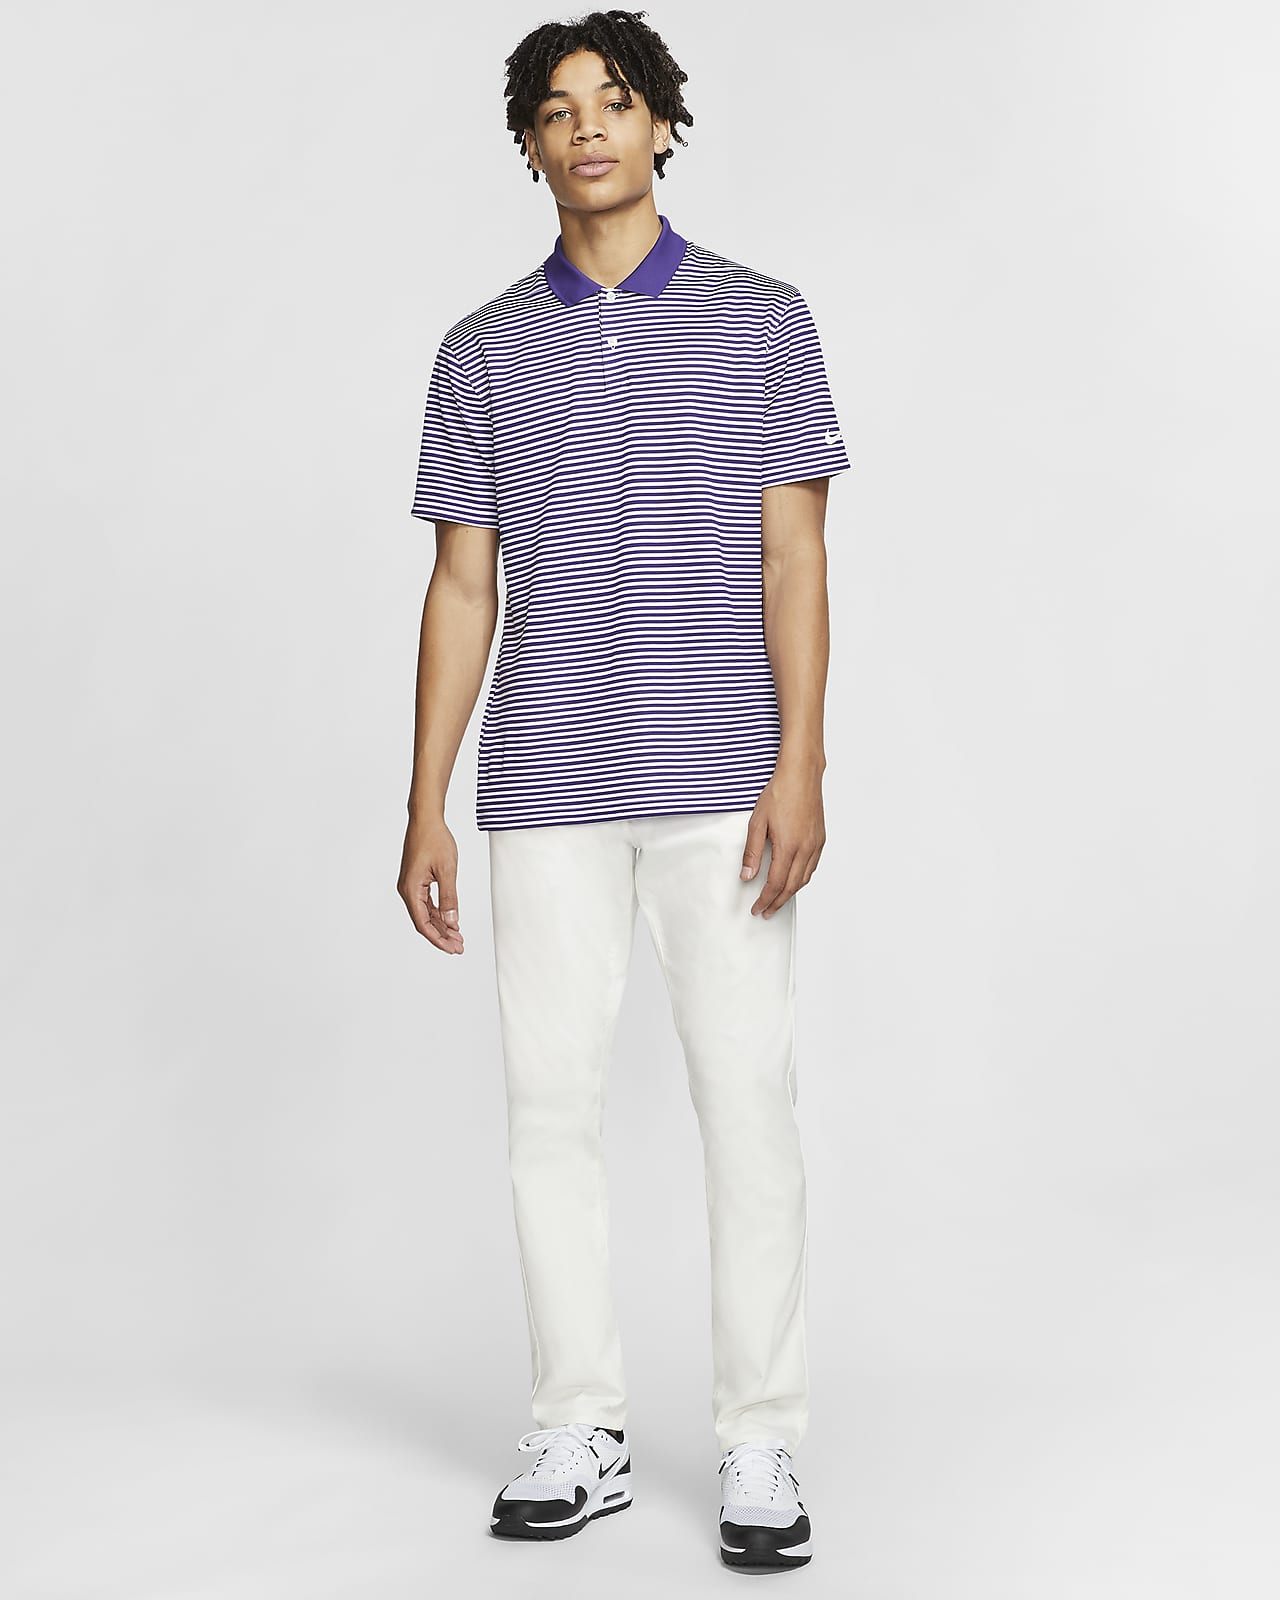 Buy > nike 3xl golf shirts > in stock